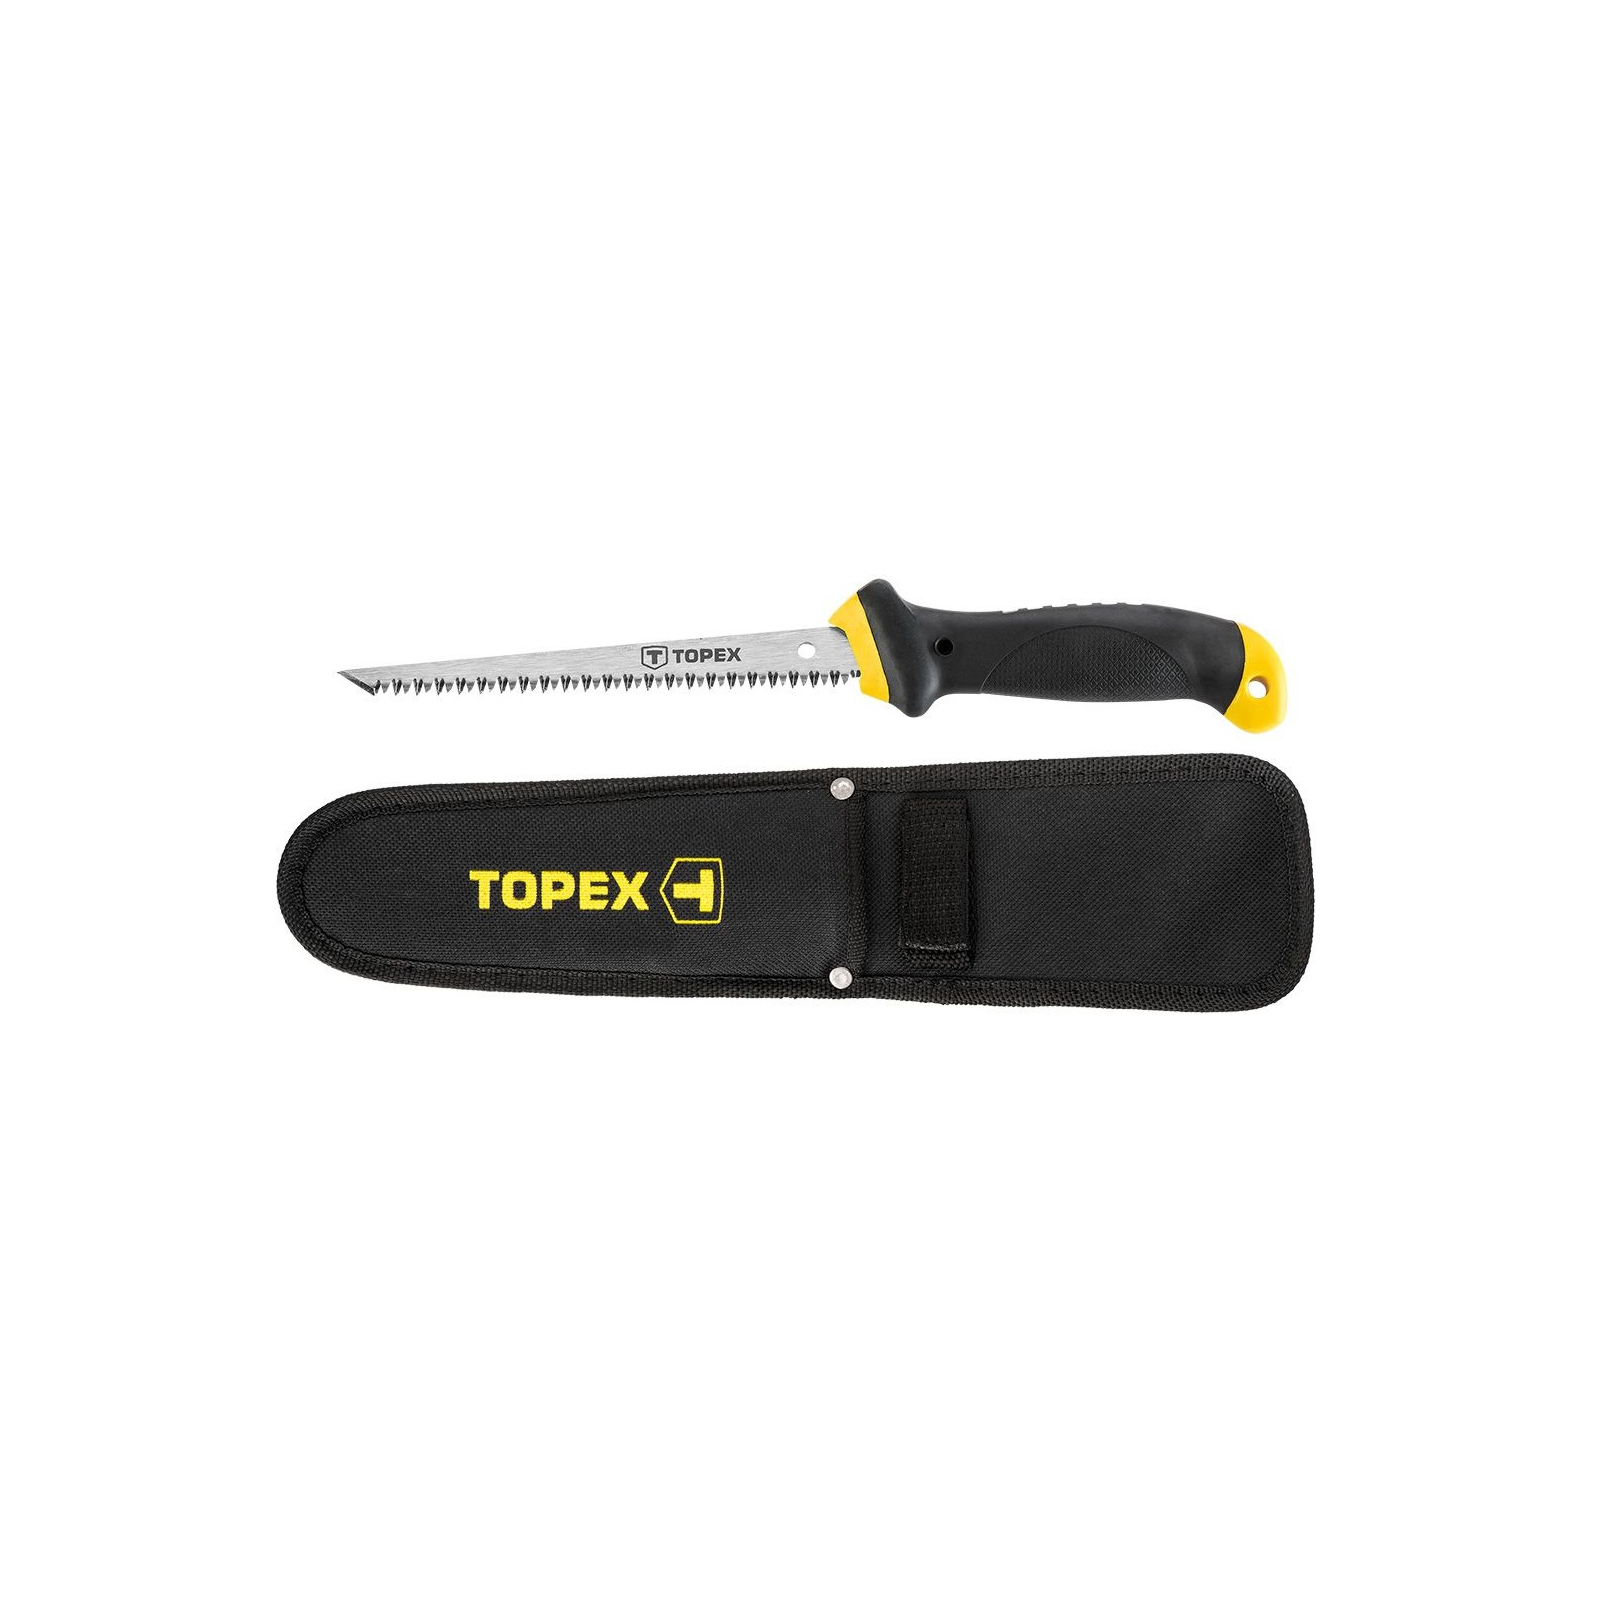 Ножовка Topex по гипсокартону, держатель пластмасса, 8TPI, лезвие 150 мм, (10A717P)